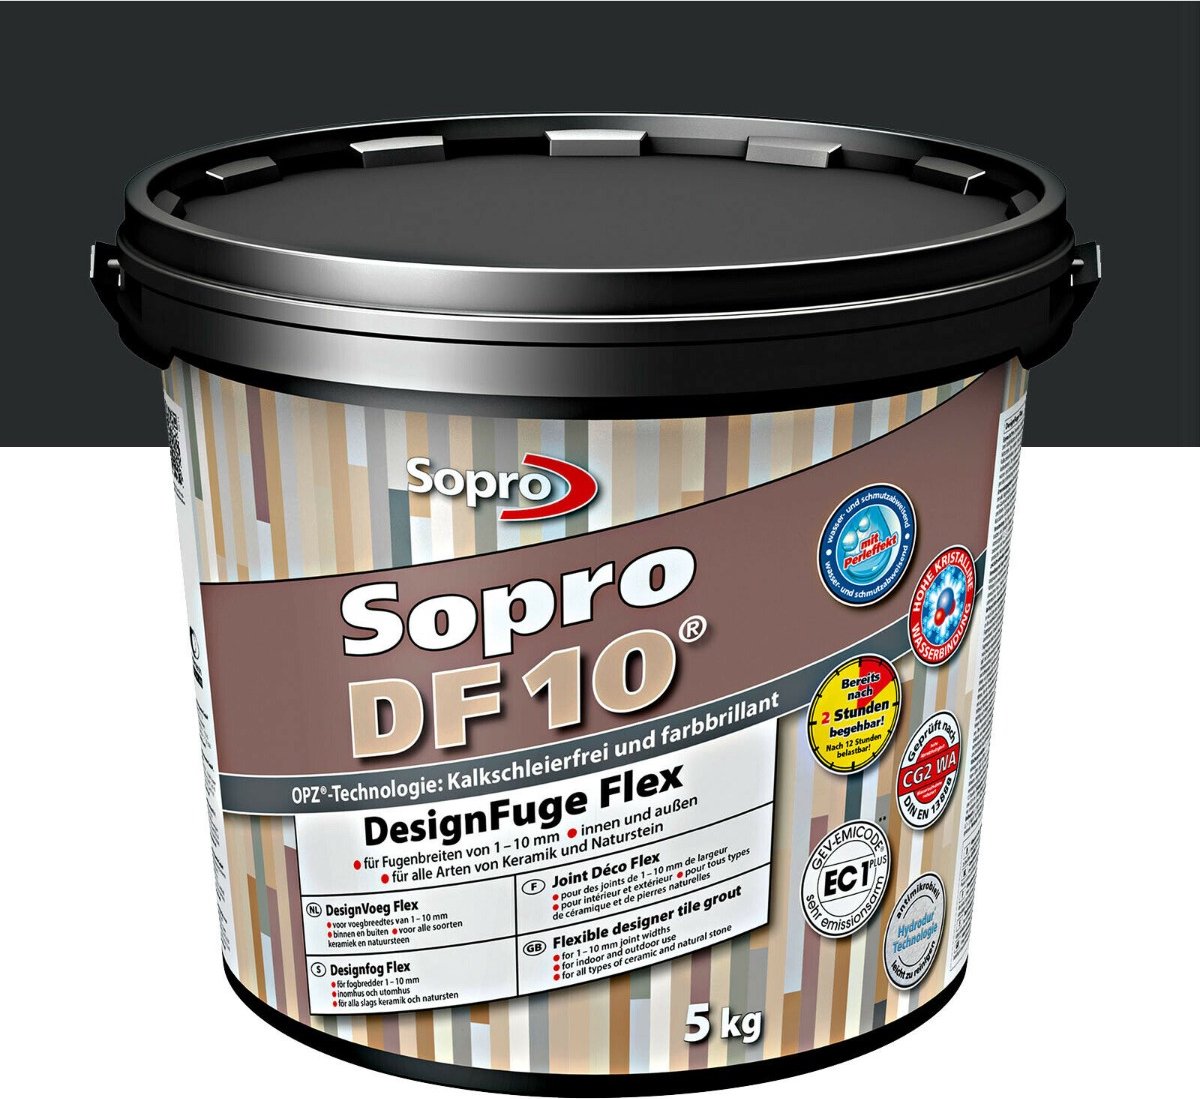 Voegmortel Sopro DF 10 Flexibel zwart nr. 90 5kg - Sopro